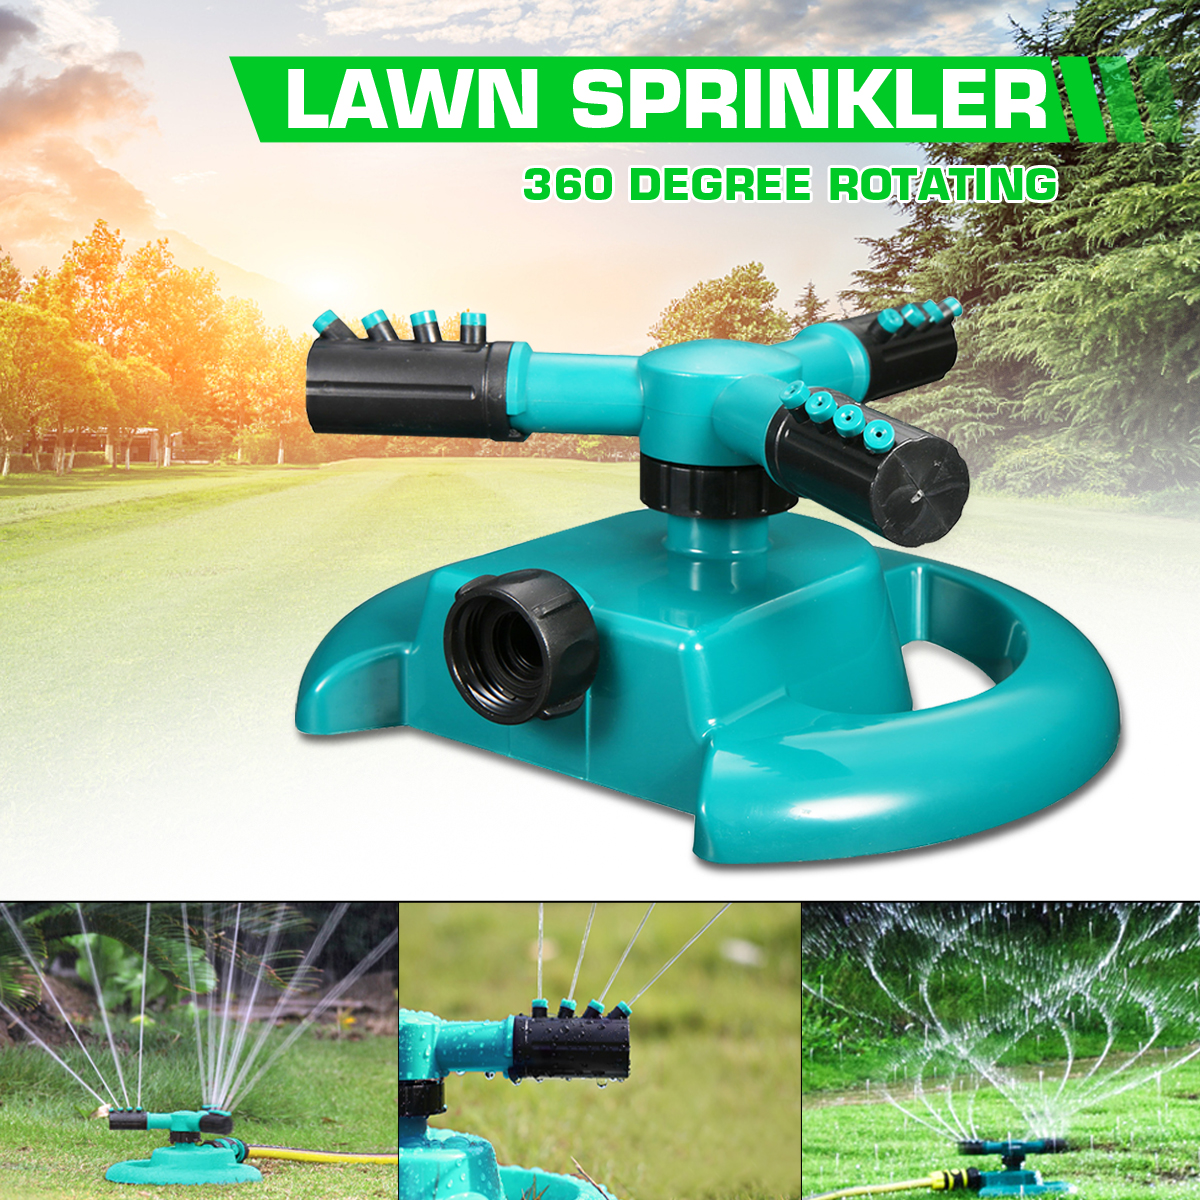 Lawn-Sprinkler-Automatic-Garden-Water-Sprinklers-Irrigation-Rotation-360deg-US-1720405-1